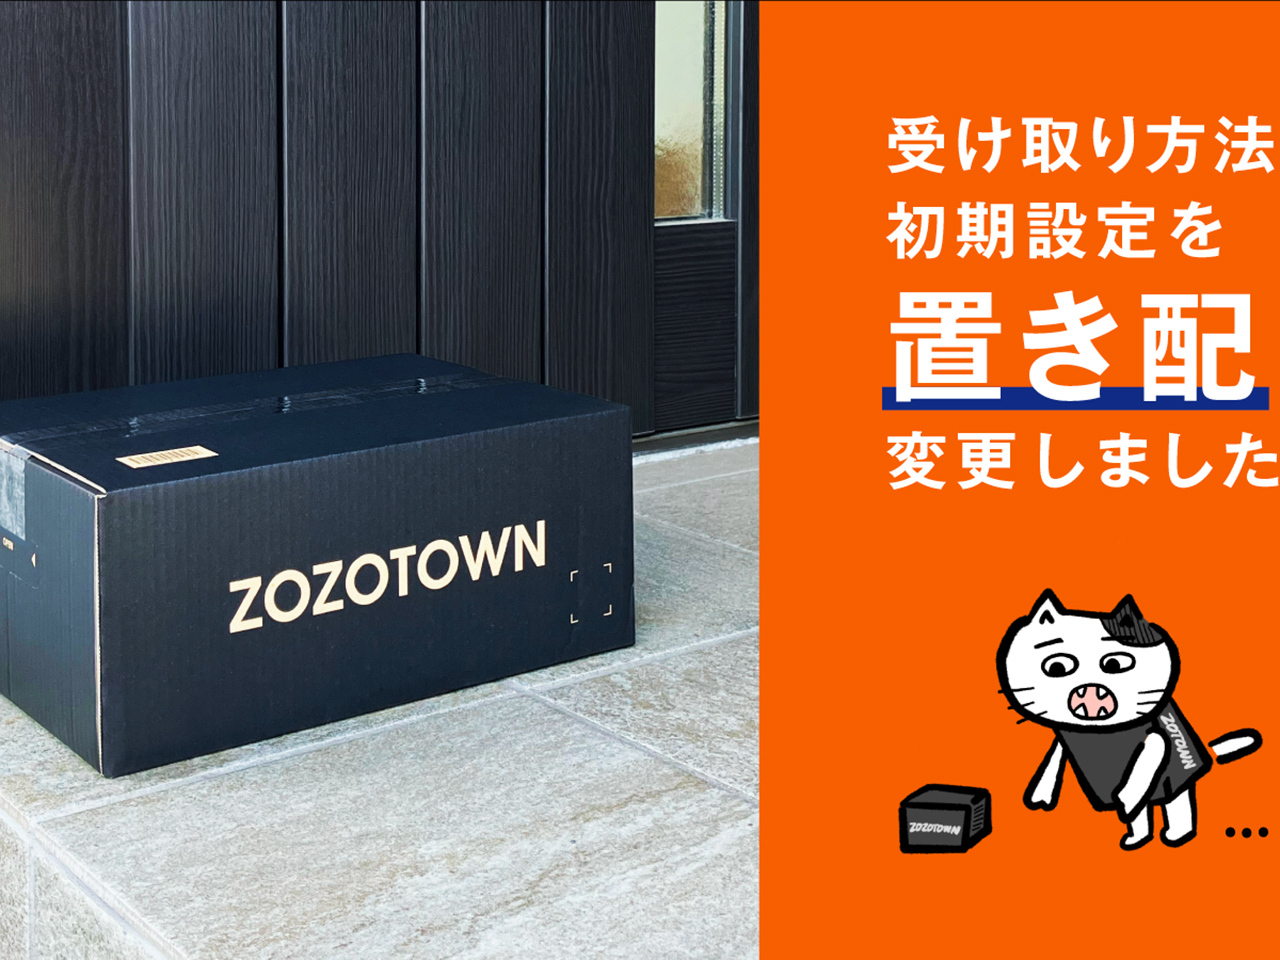 ZOZOTOWN」の受け取り方法、初期設定が「置き配」に--9月28日に変更 